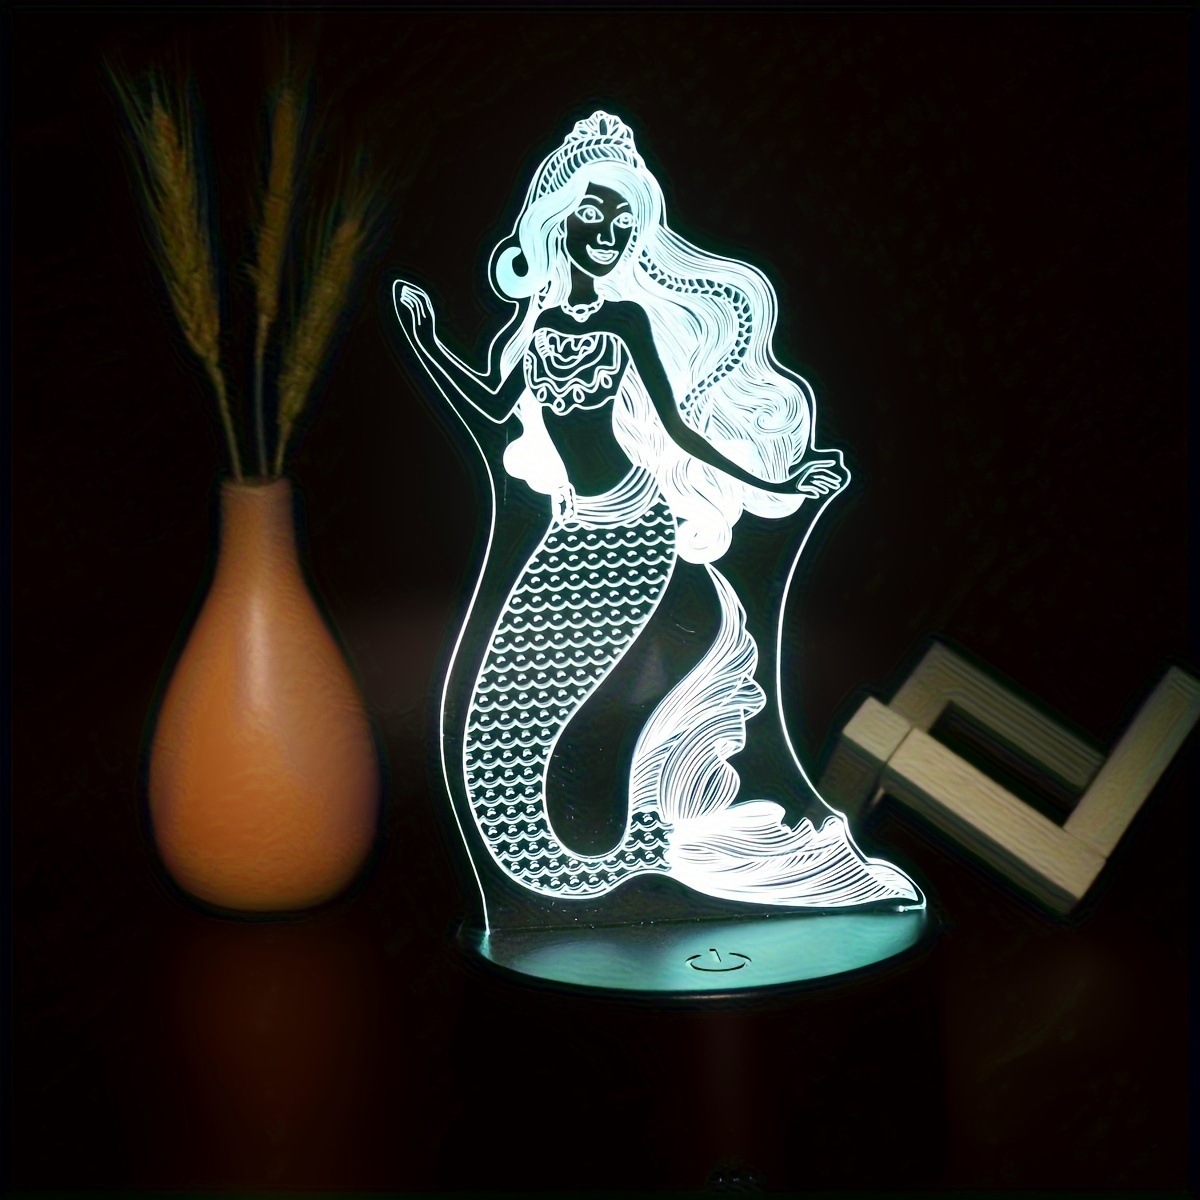 Mermaid 3d Illusion Lamp, Mermaid Gifts For Girls, 3d Night Light